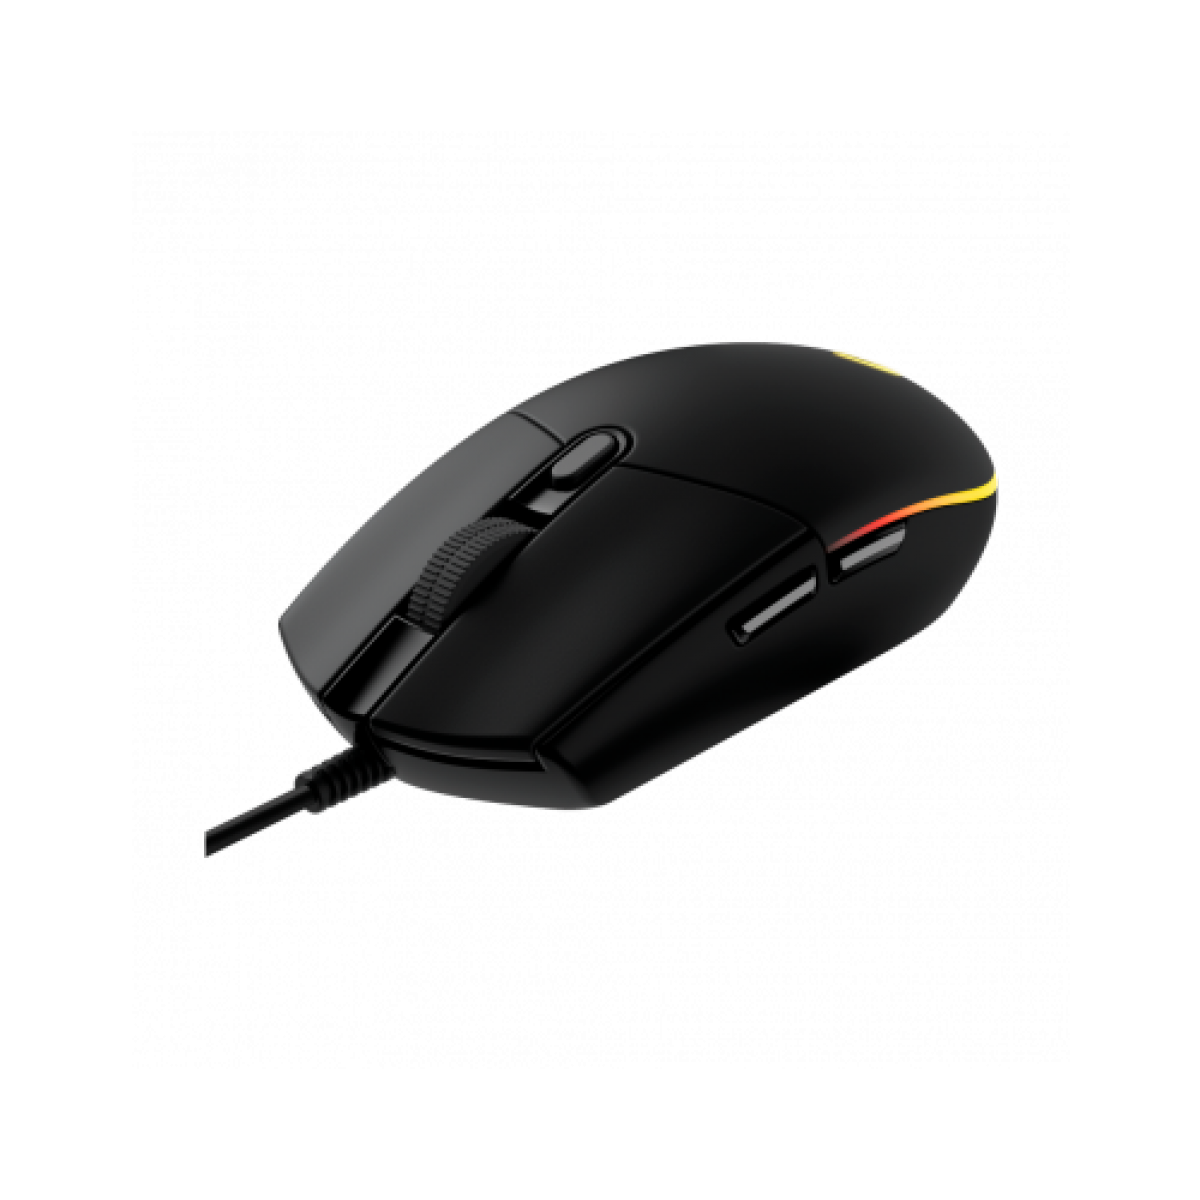 Mouse Gamer Logitech G203 Lightsync RGB, 6 Botões Programáveis, 8000 DPI, Black, 910-005793